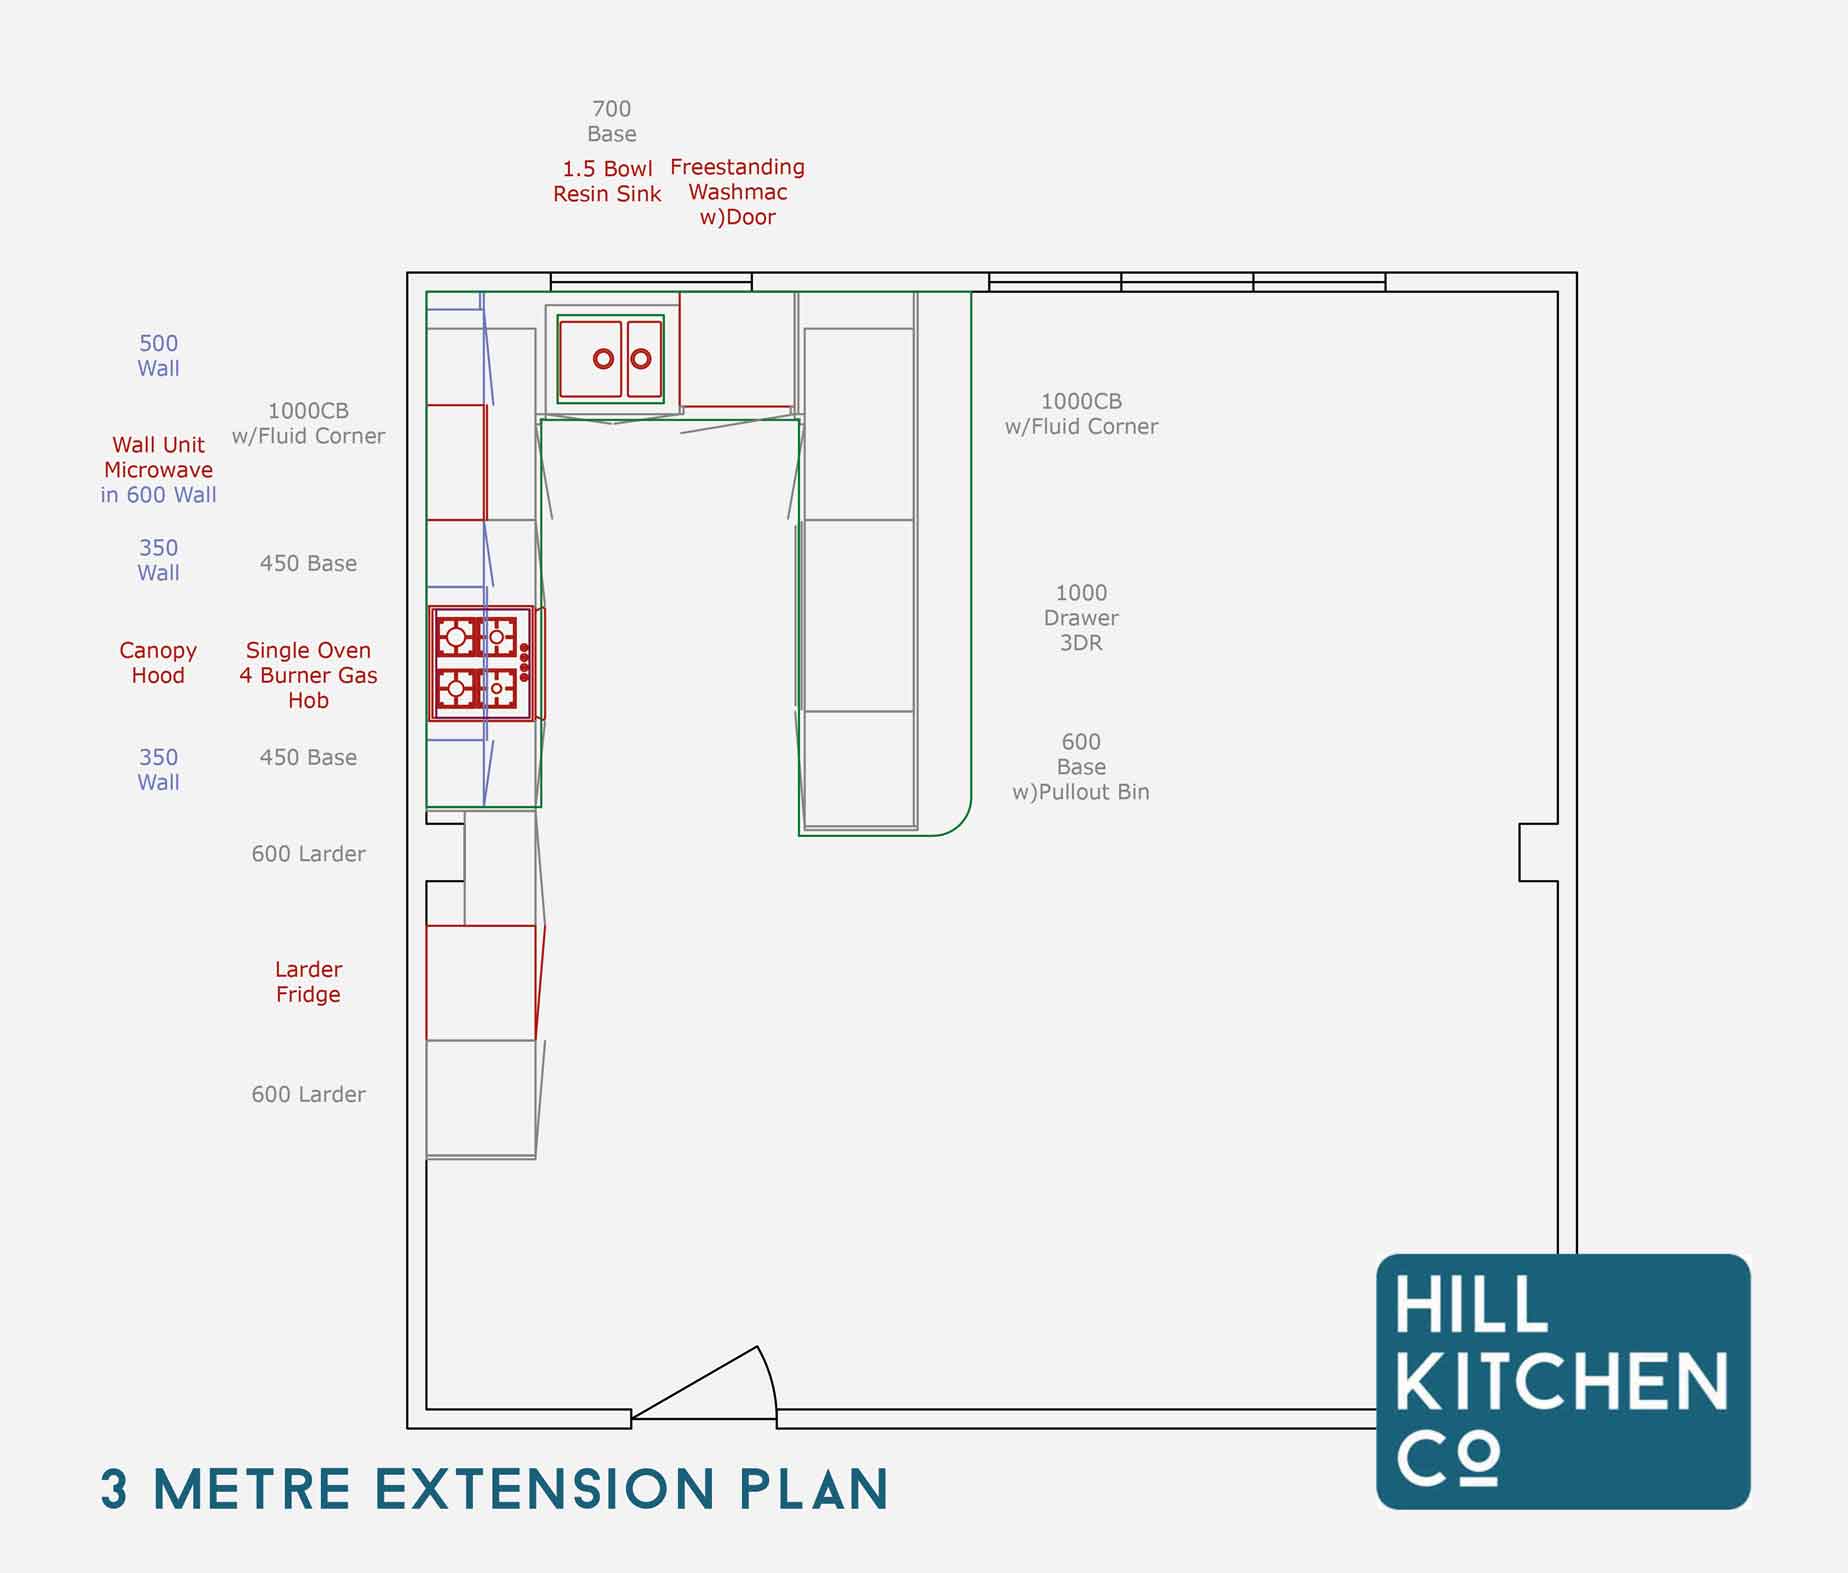 Plan view of 3 metre extension kitchen design